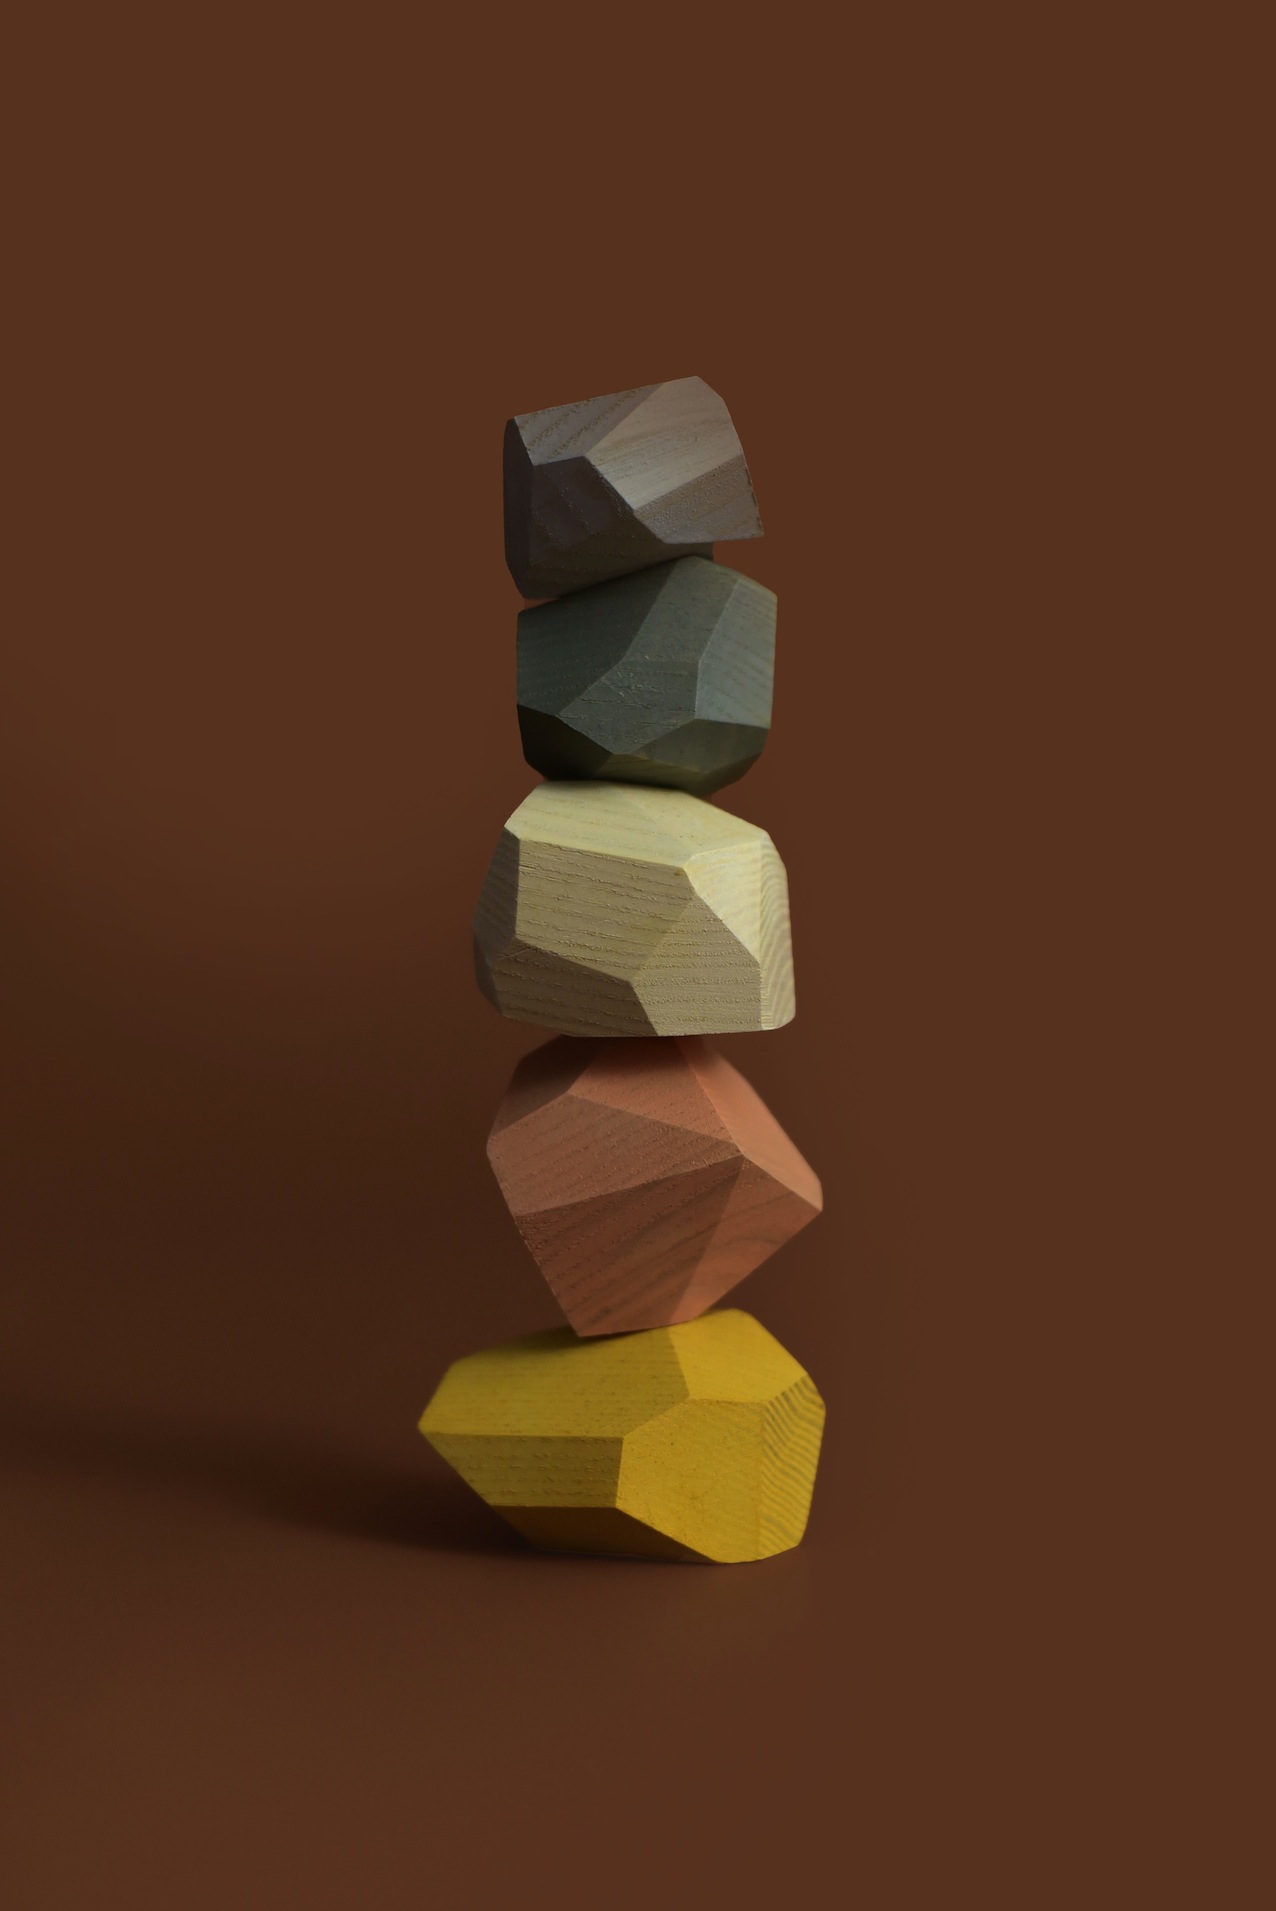 Min MIn Copenhagen | Balance Stones |McATamney Gallery and Design Store | Geraldine NZ Balancing stones wb copy.jpeg